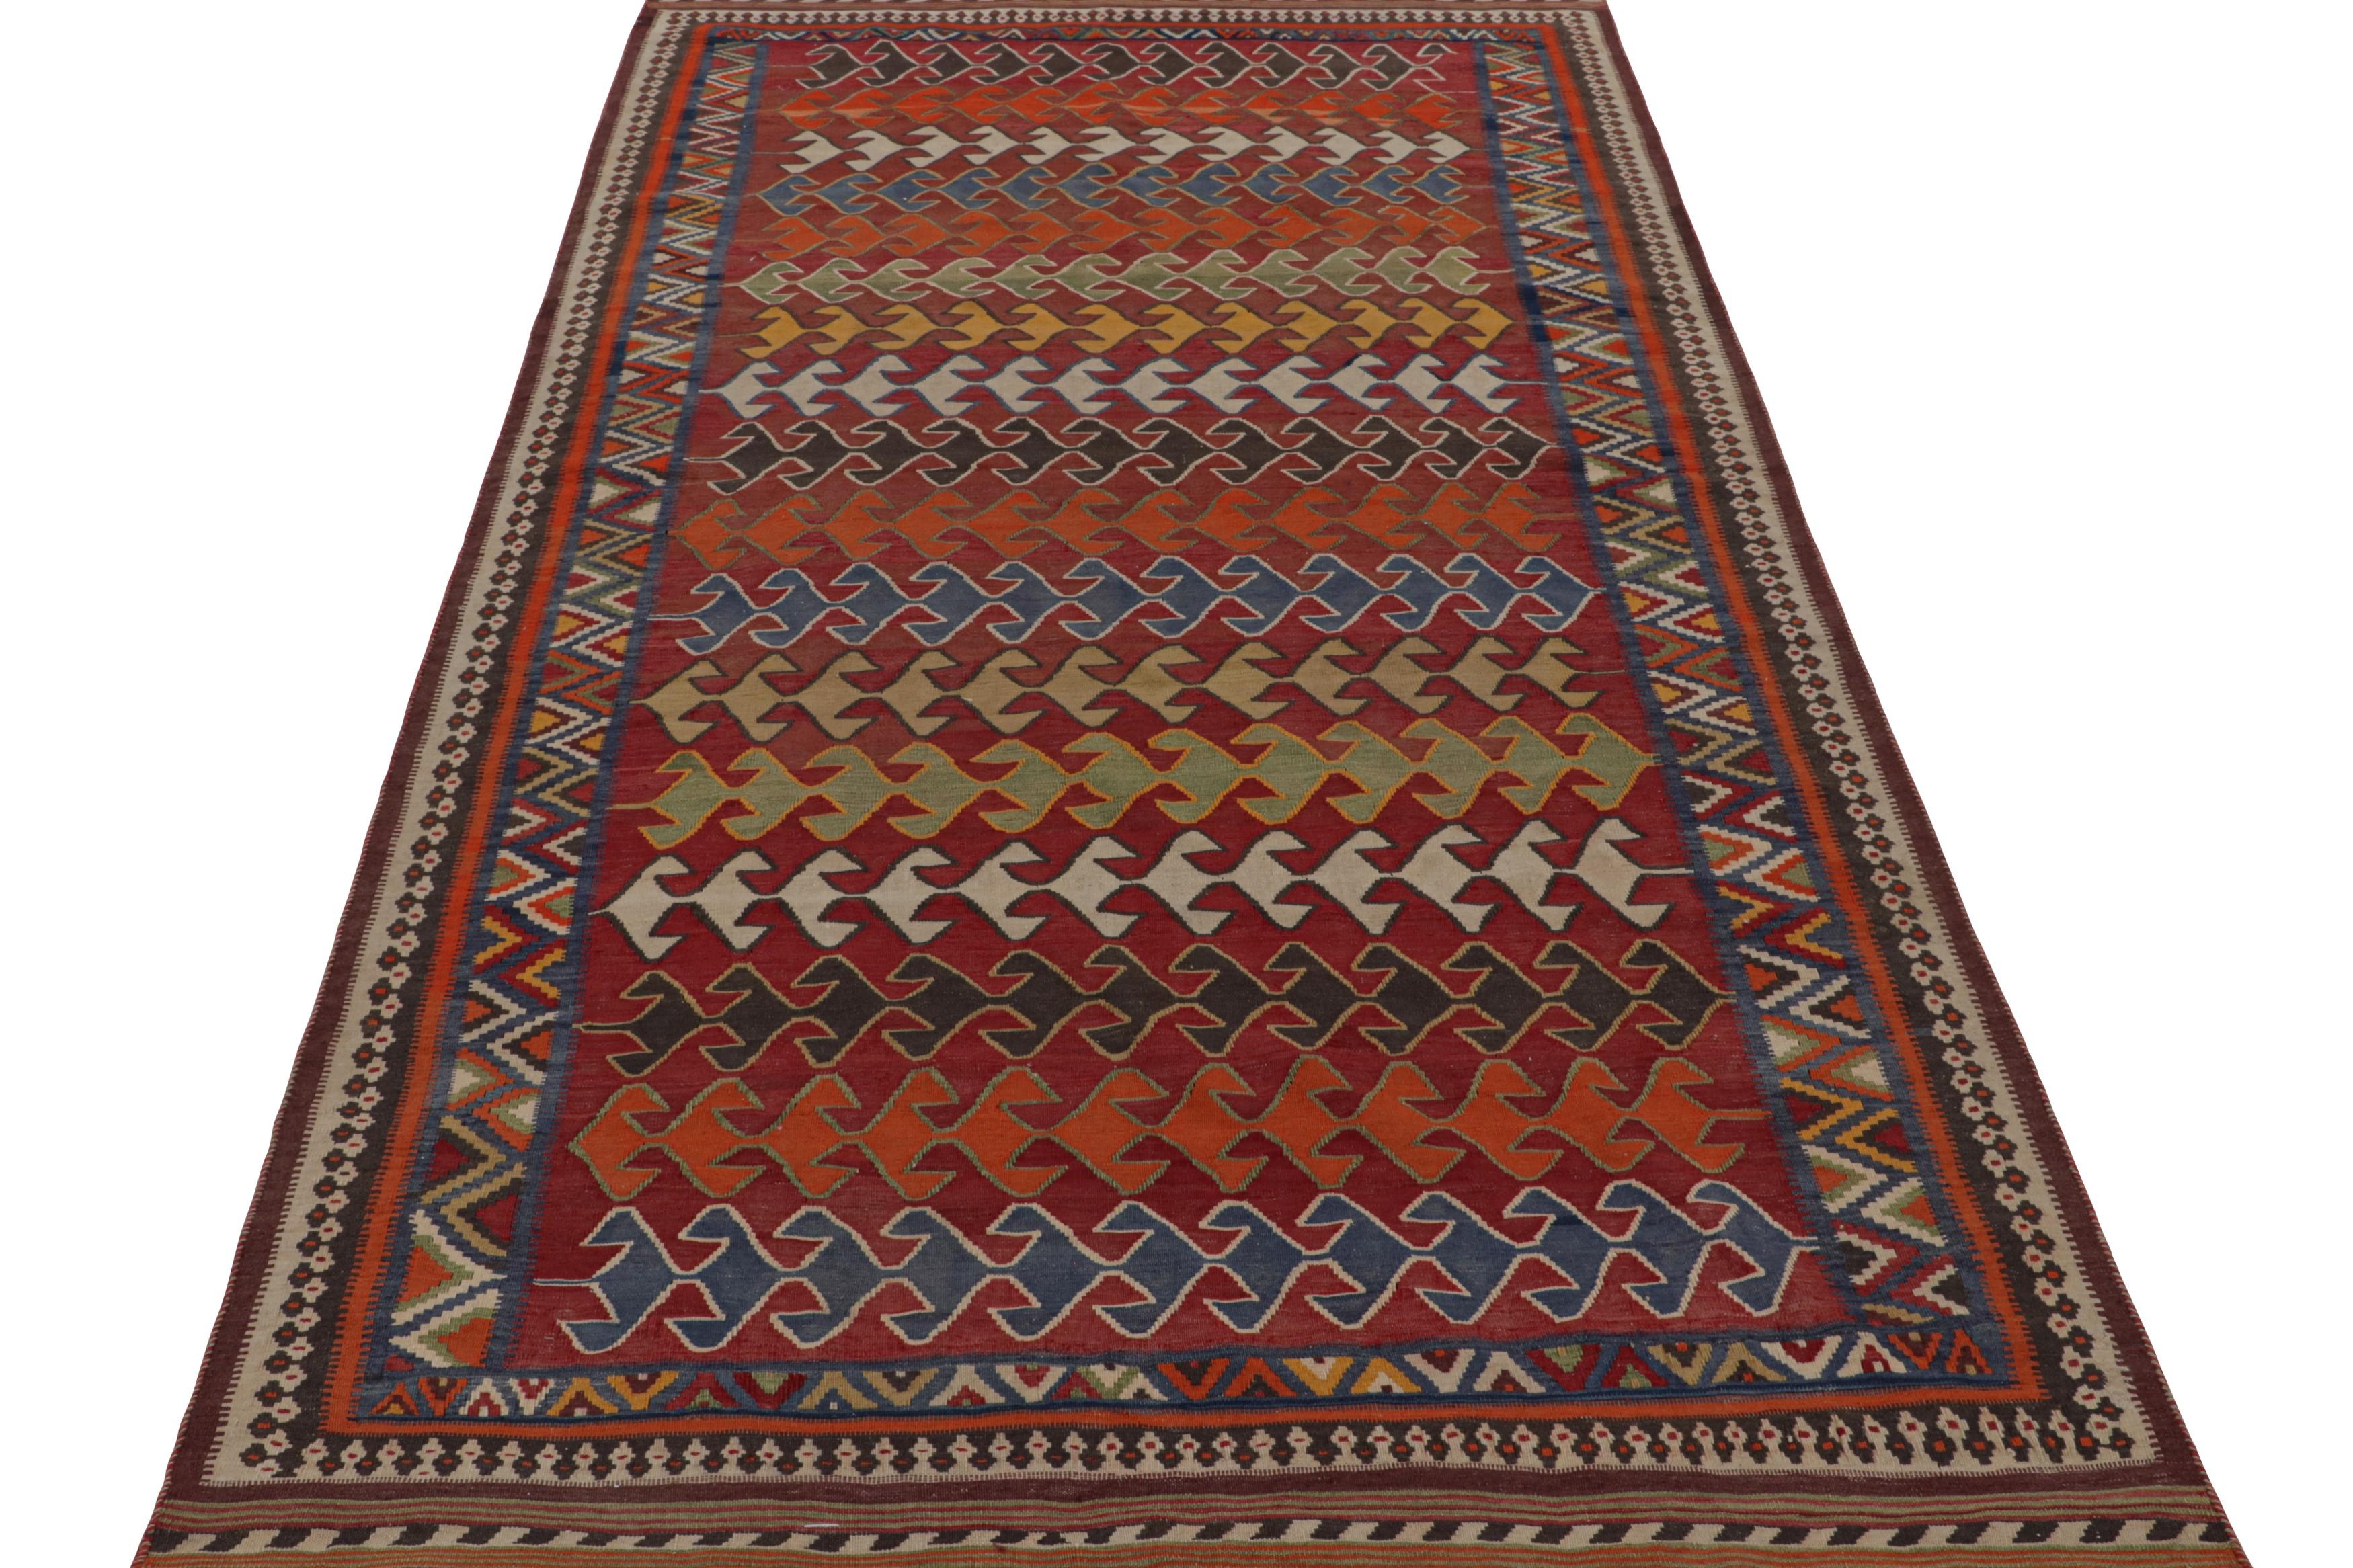 Tribal Vintage Afghani tribal Kilim rug, with Geometric Patterns, from Rug & Kilim For Sale